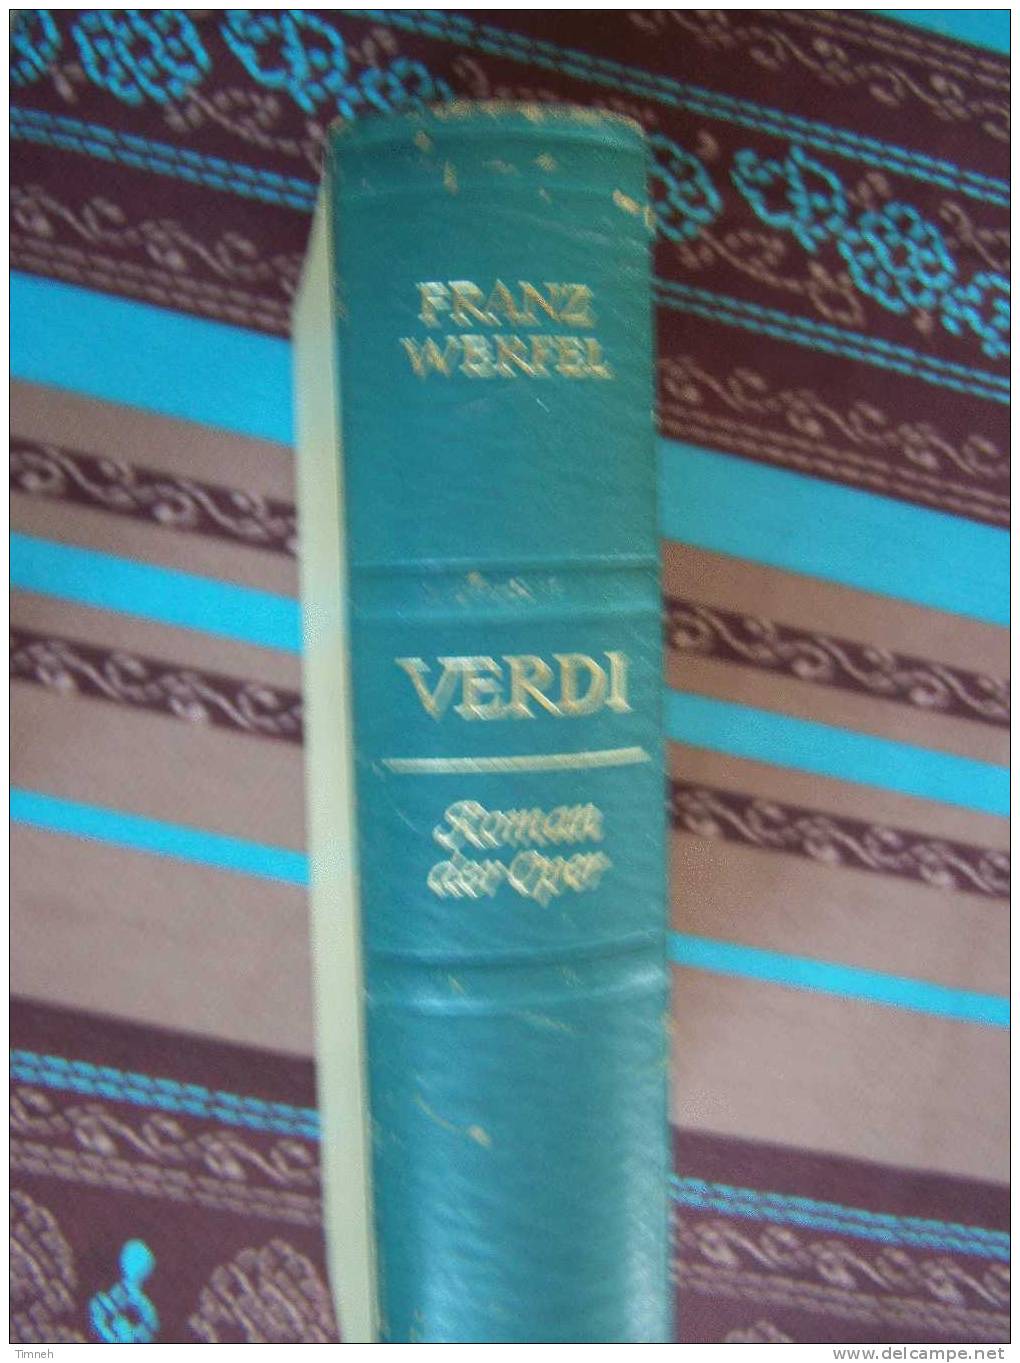 VERDI-Roman Der Oper-Franz Werfel-1955-Deutsche Buch Gemeinschaft- - Biografieën & Memoires